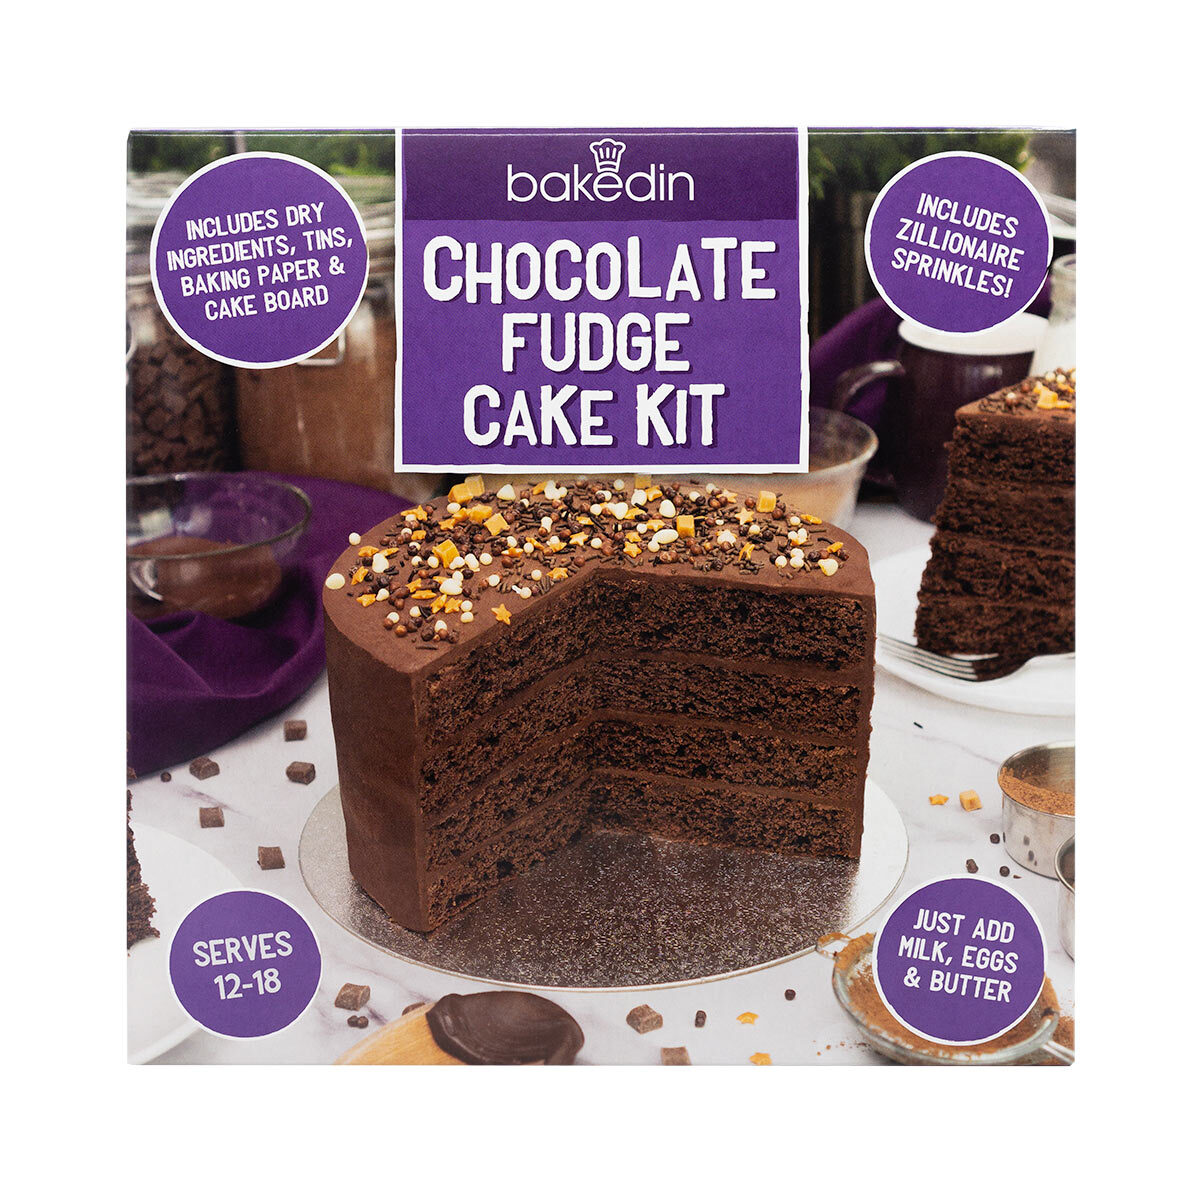 Bakedin Chocolate Fudge Cake Kit 1kg Costco UK